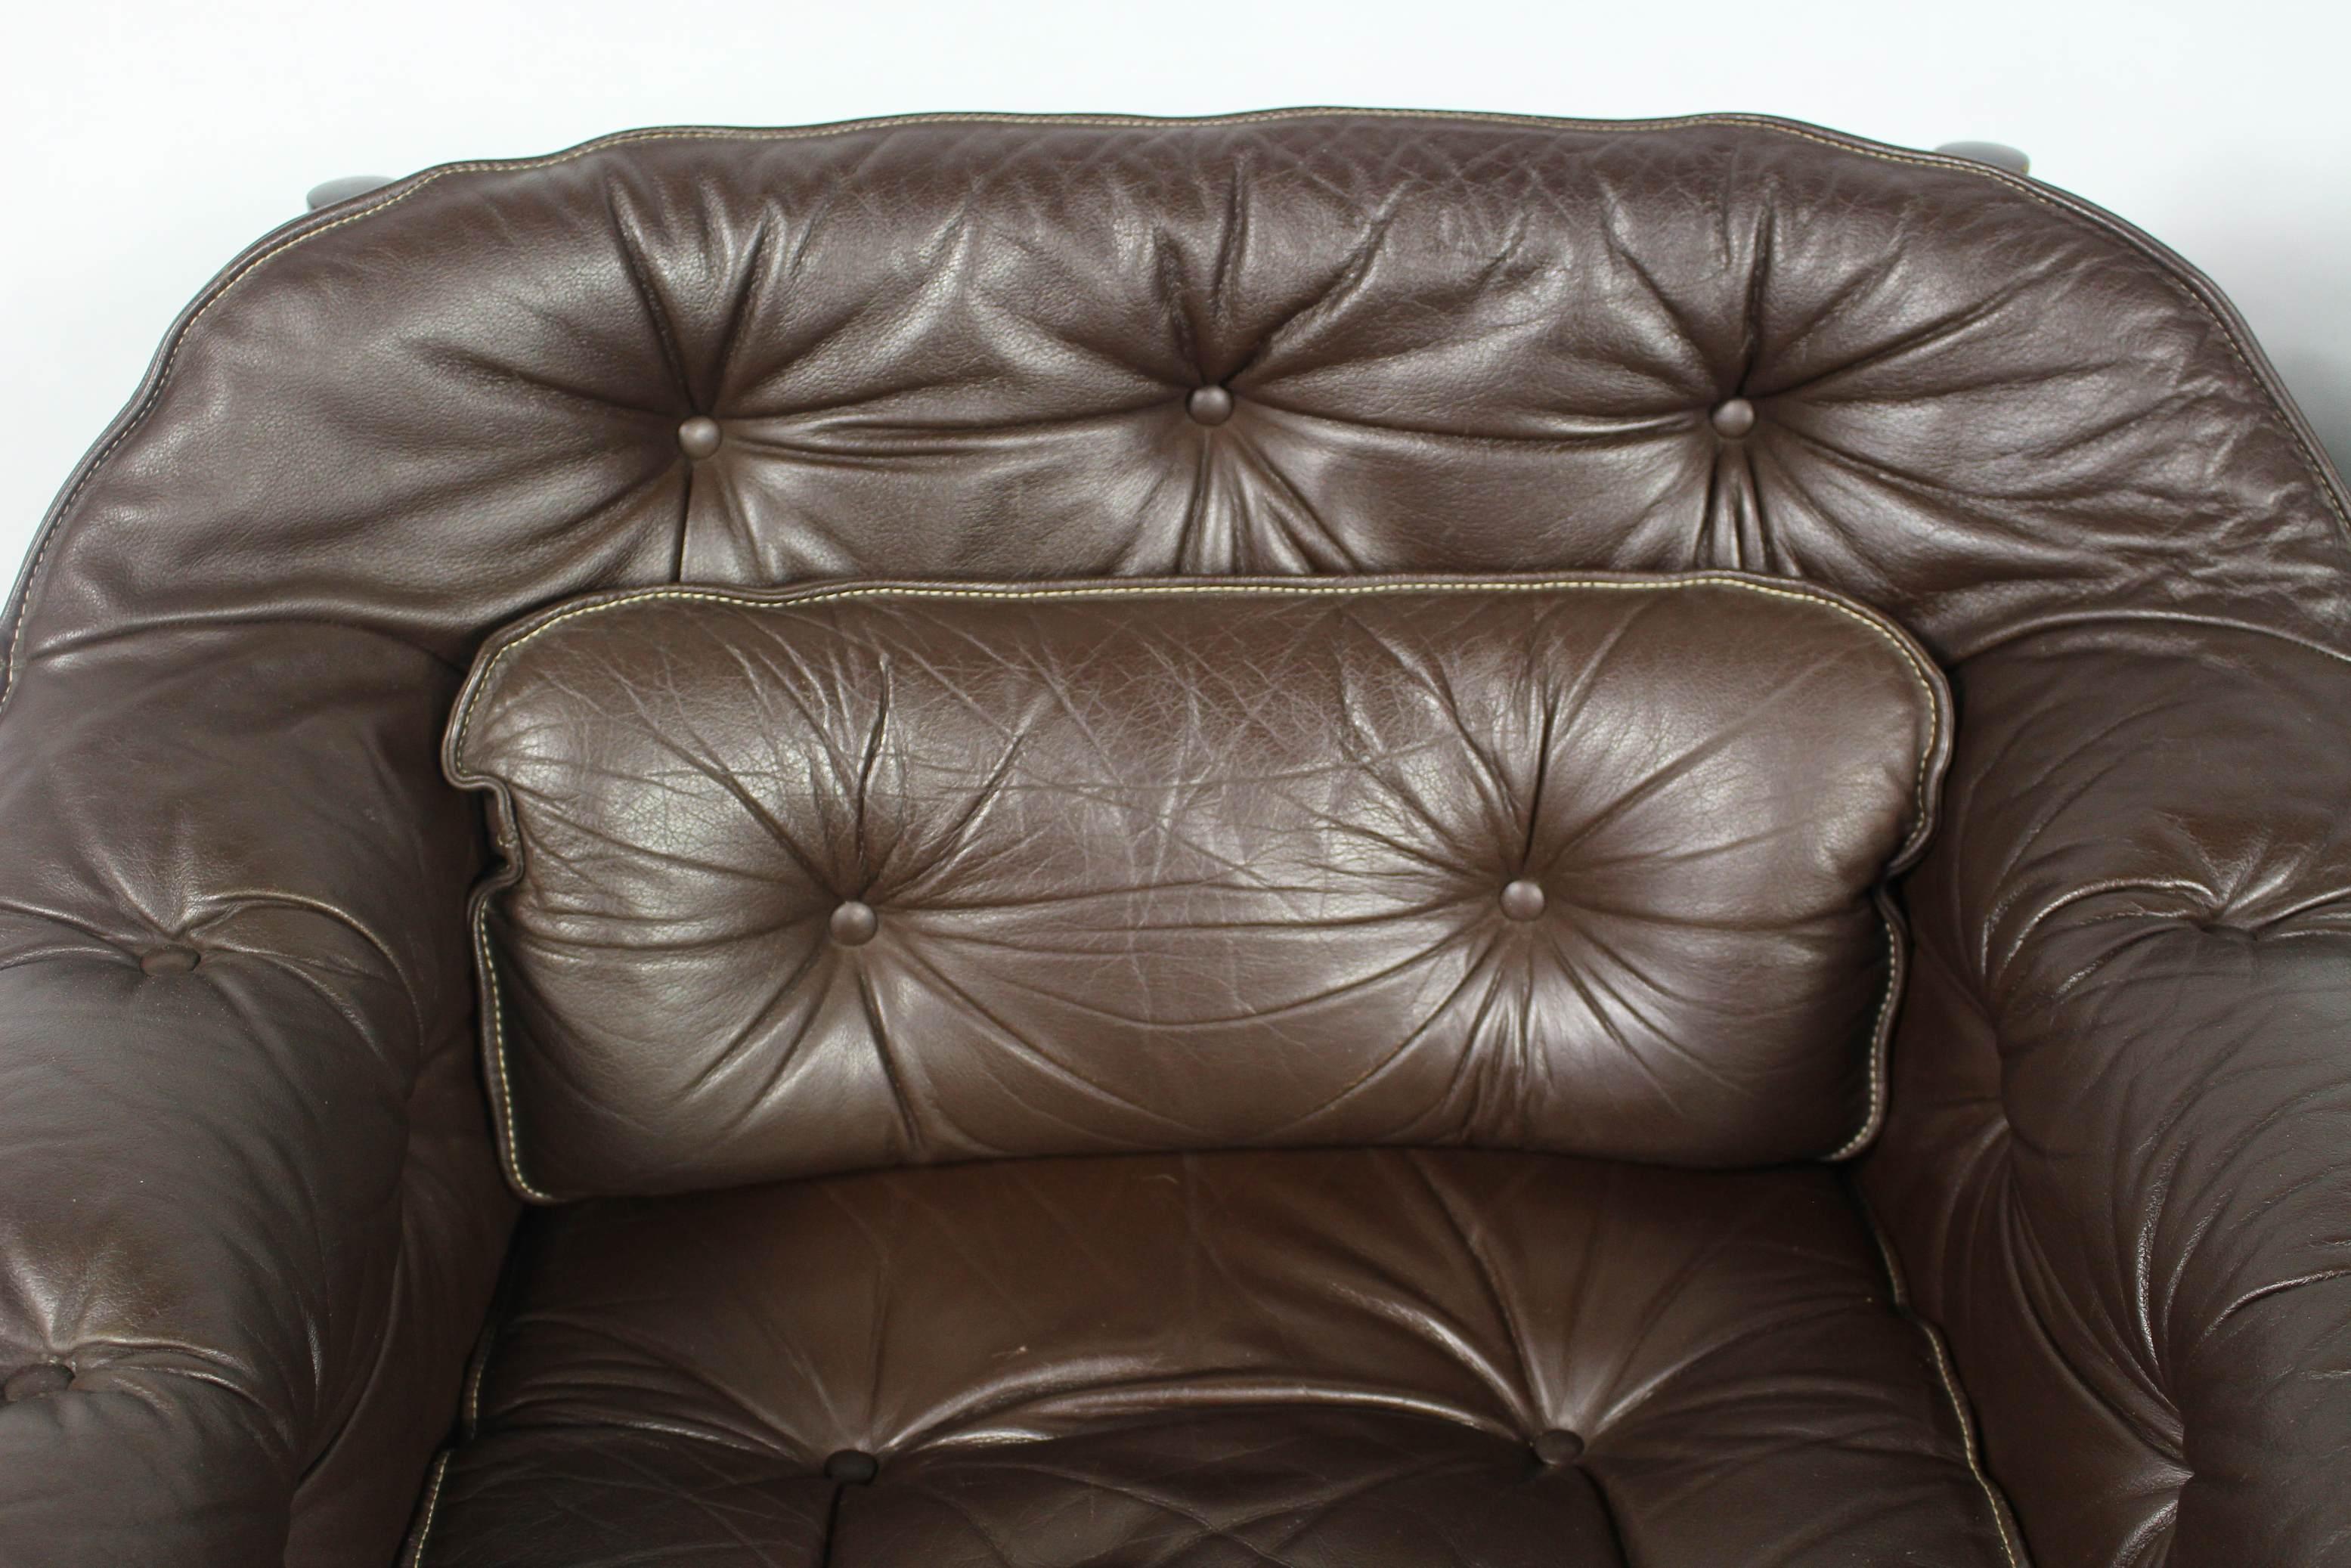 Scandinavian Modern 1960s Sven Ellekaer Brown Leather Chairs For Coja  For Sale